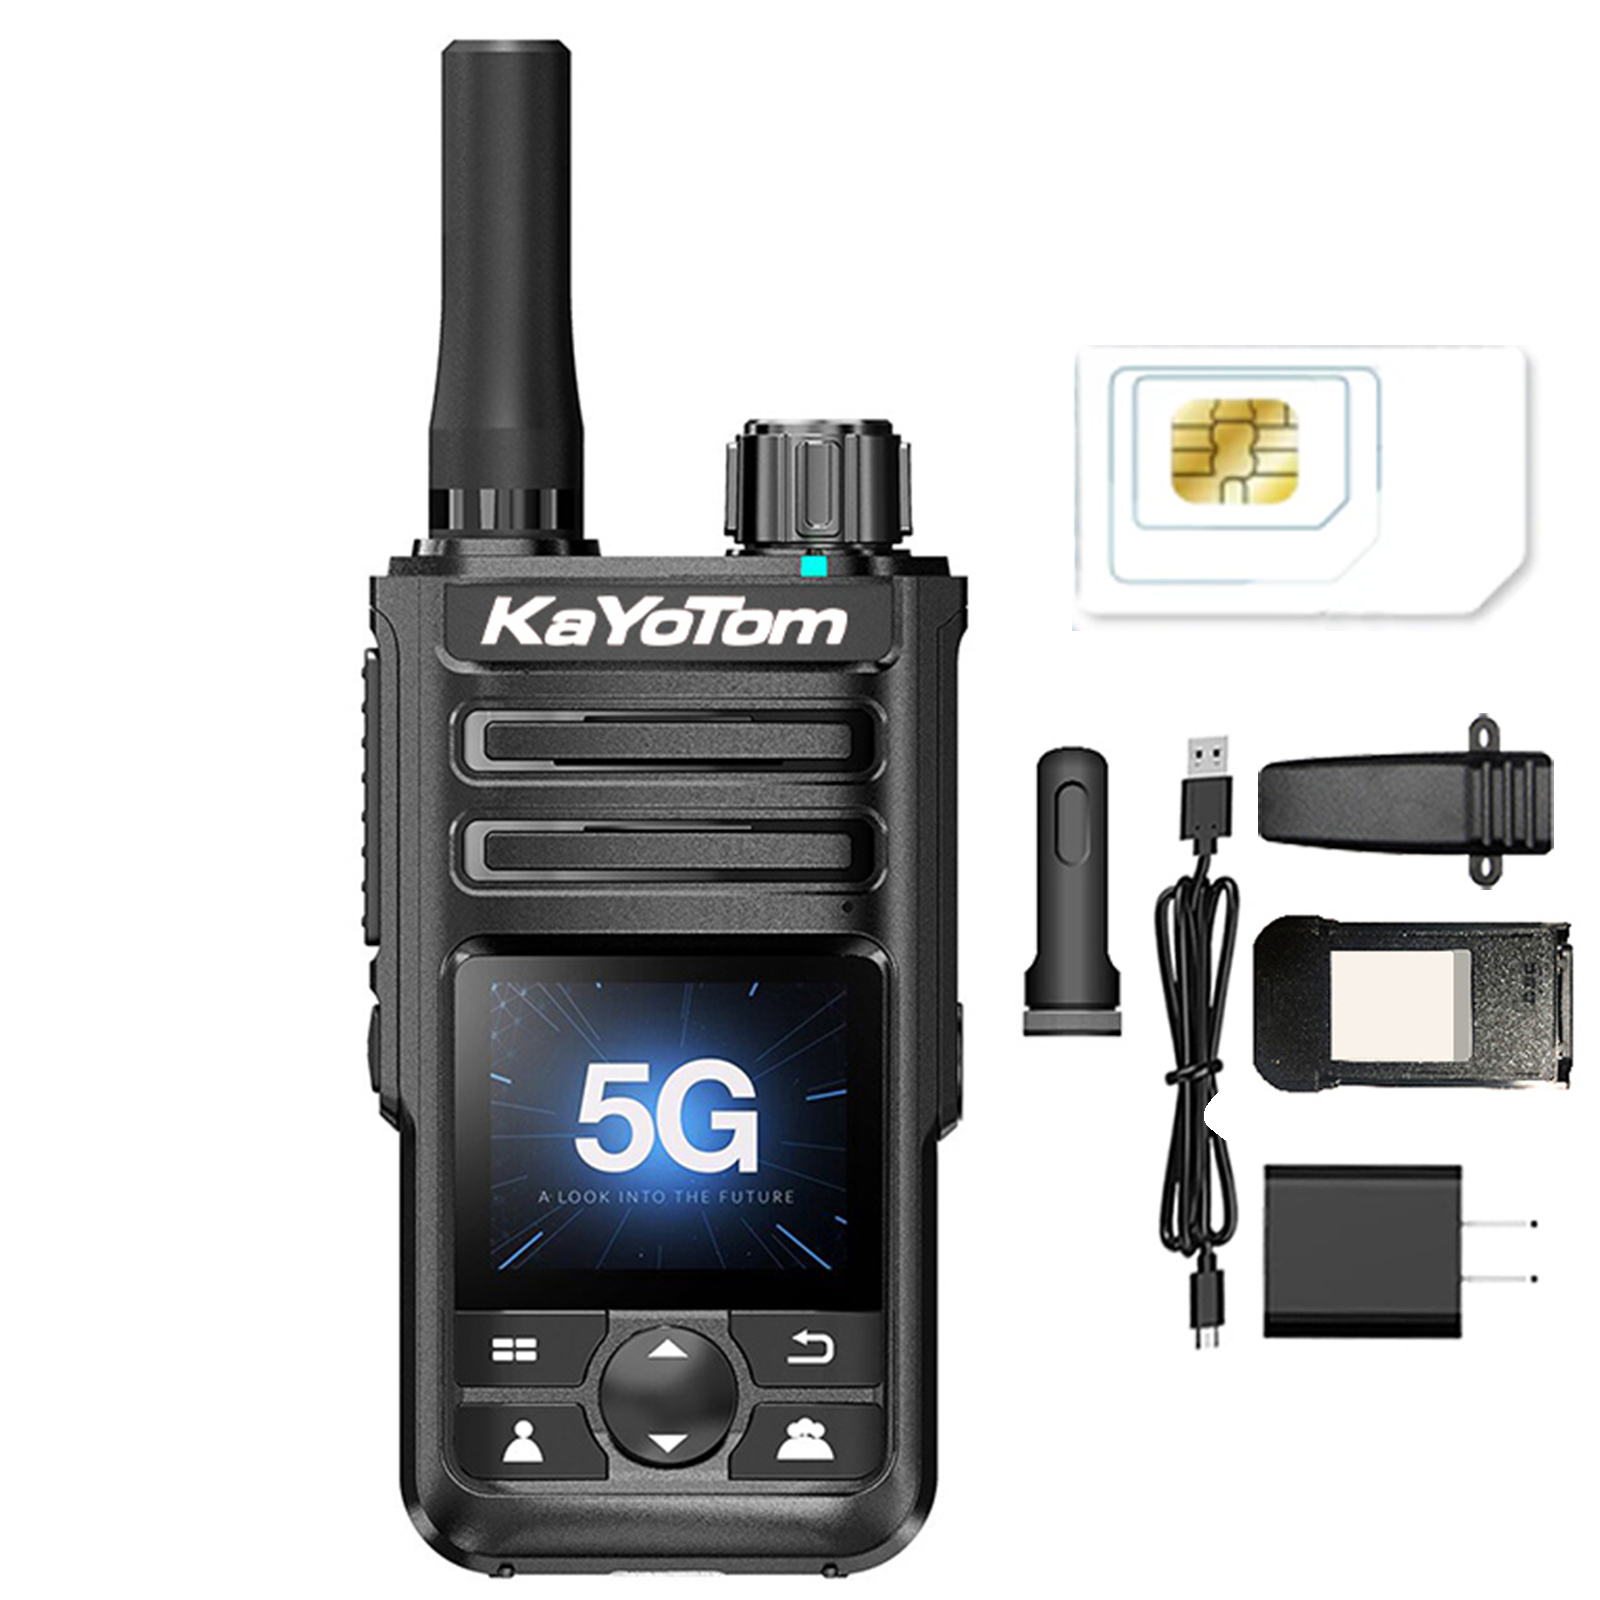 KaYoTom Global available M14 global-ptt POC 4G walkie talkie Two-way radio Mobile Porfesional long range communicator